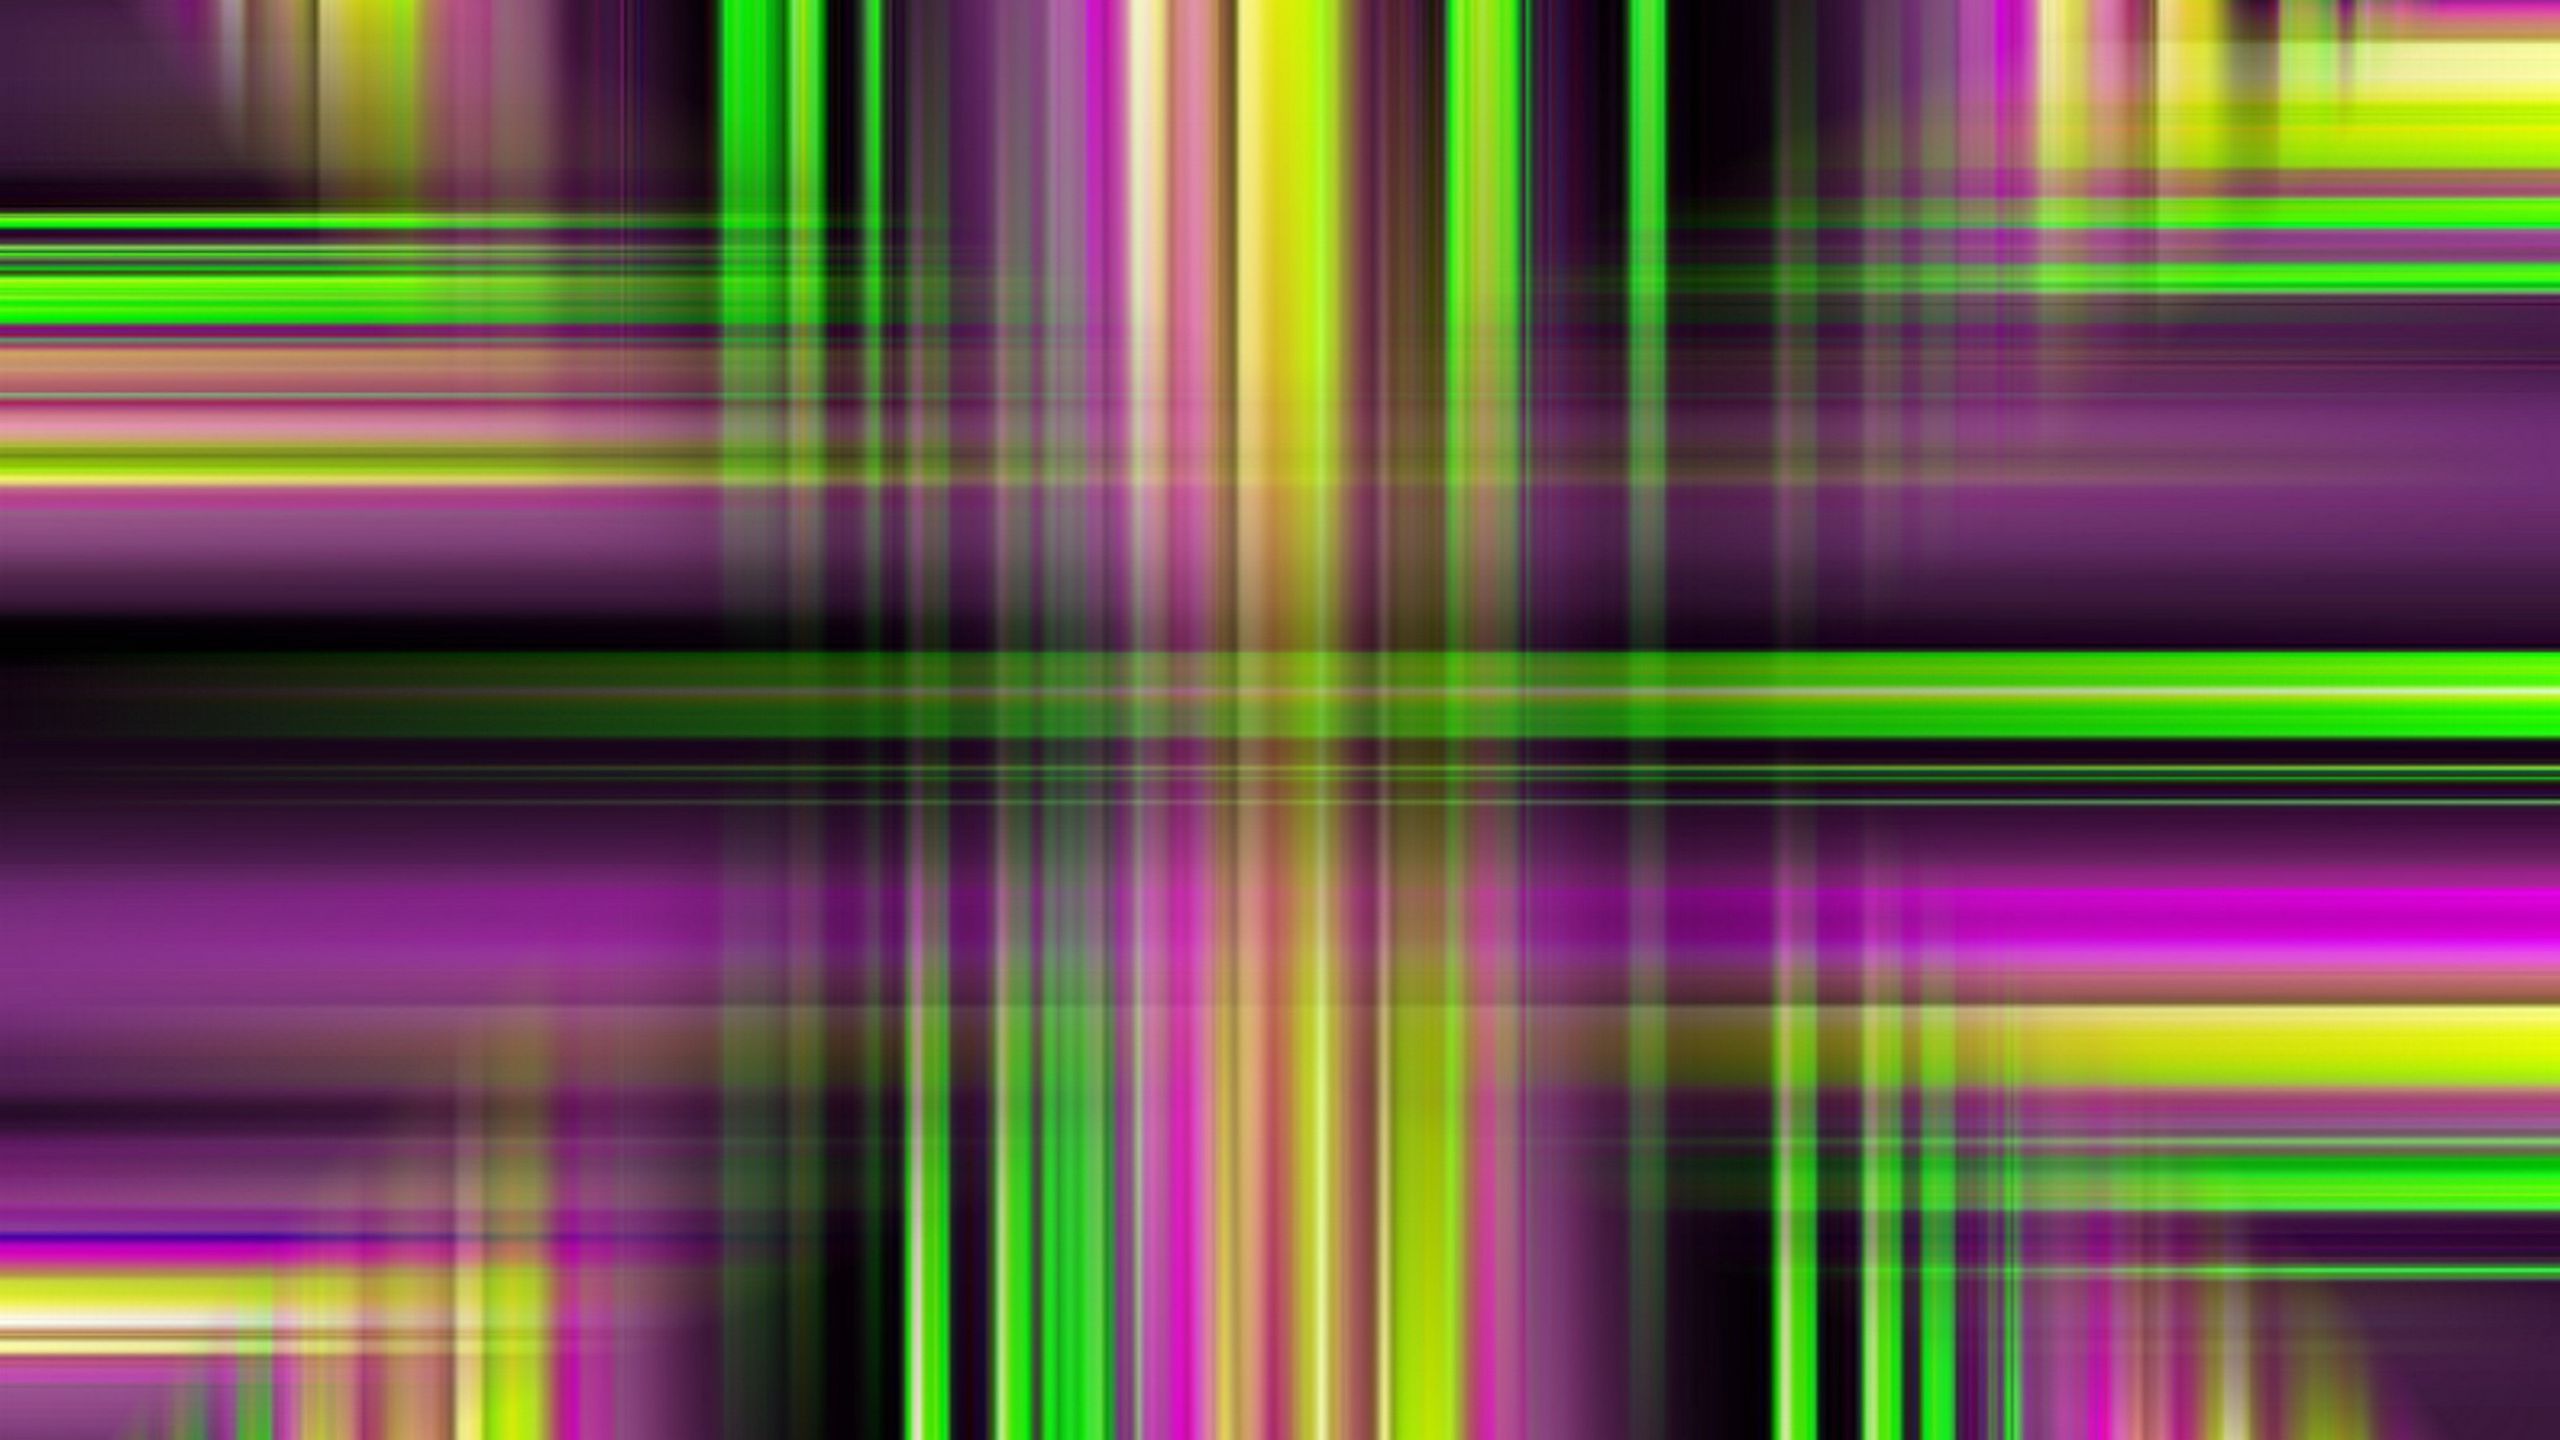 Download wallpaper 2560x1440 lines, stripes, purple, green widescreen 16:9 HD background